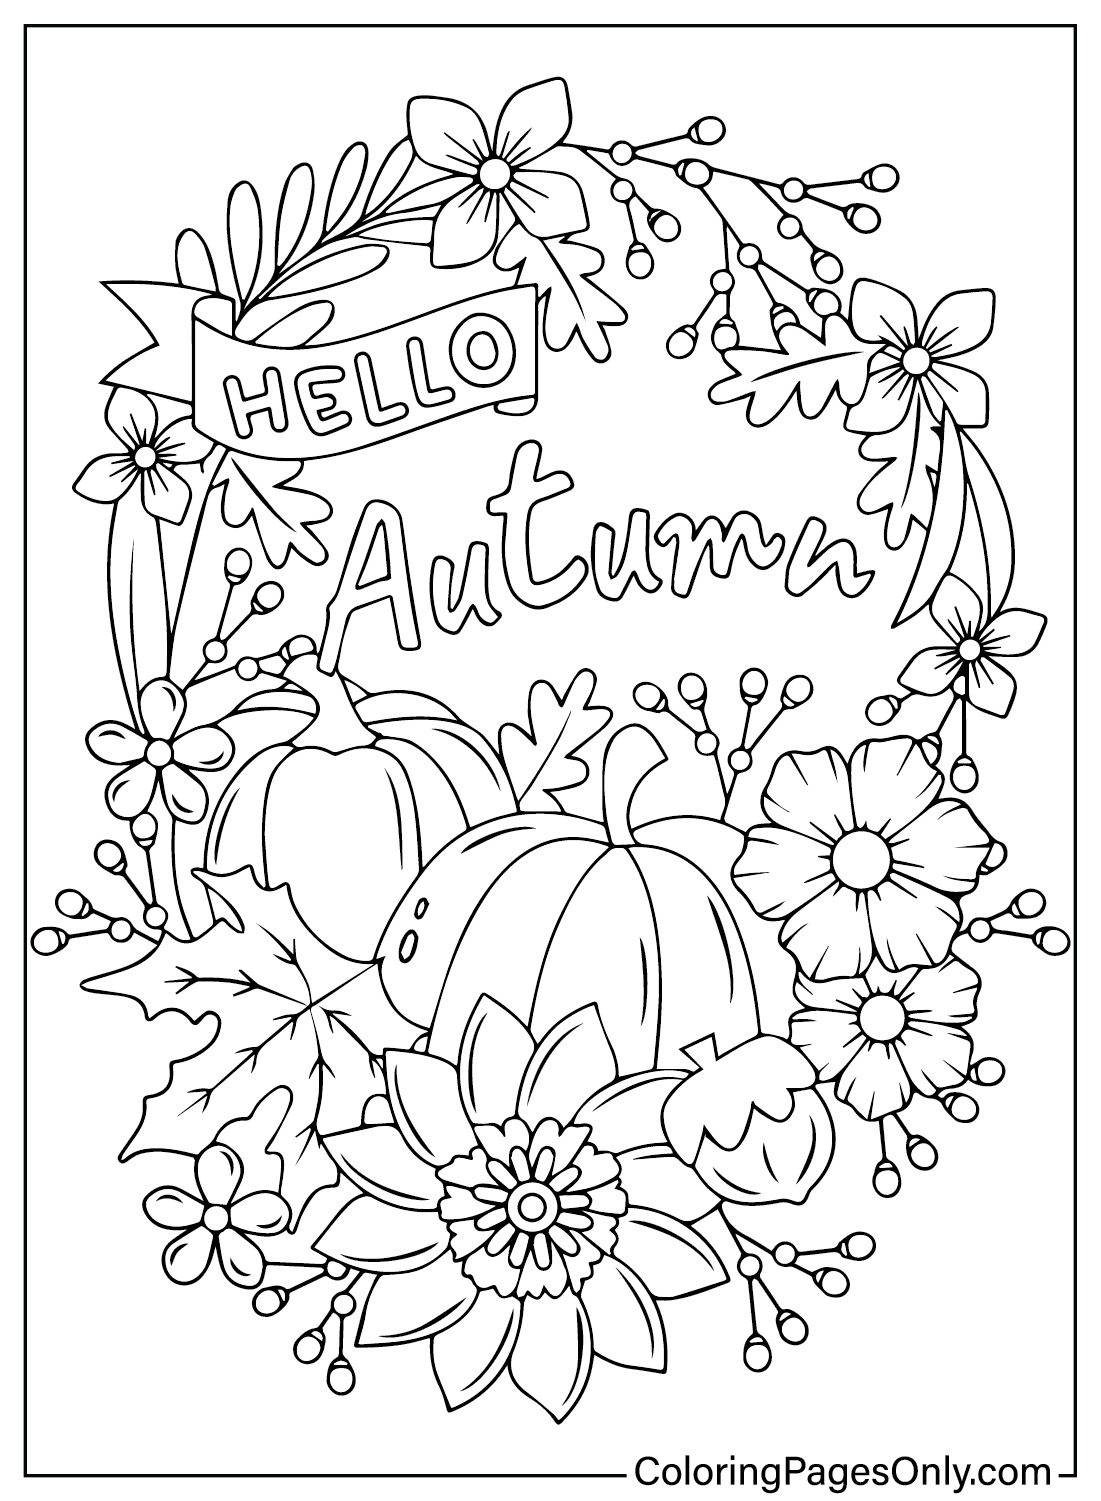 Hello Autumn November Coloring Page